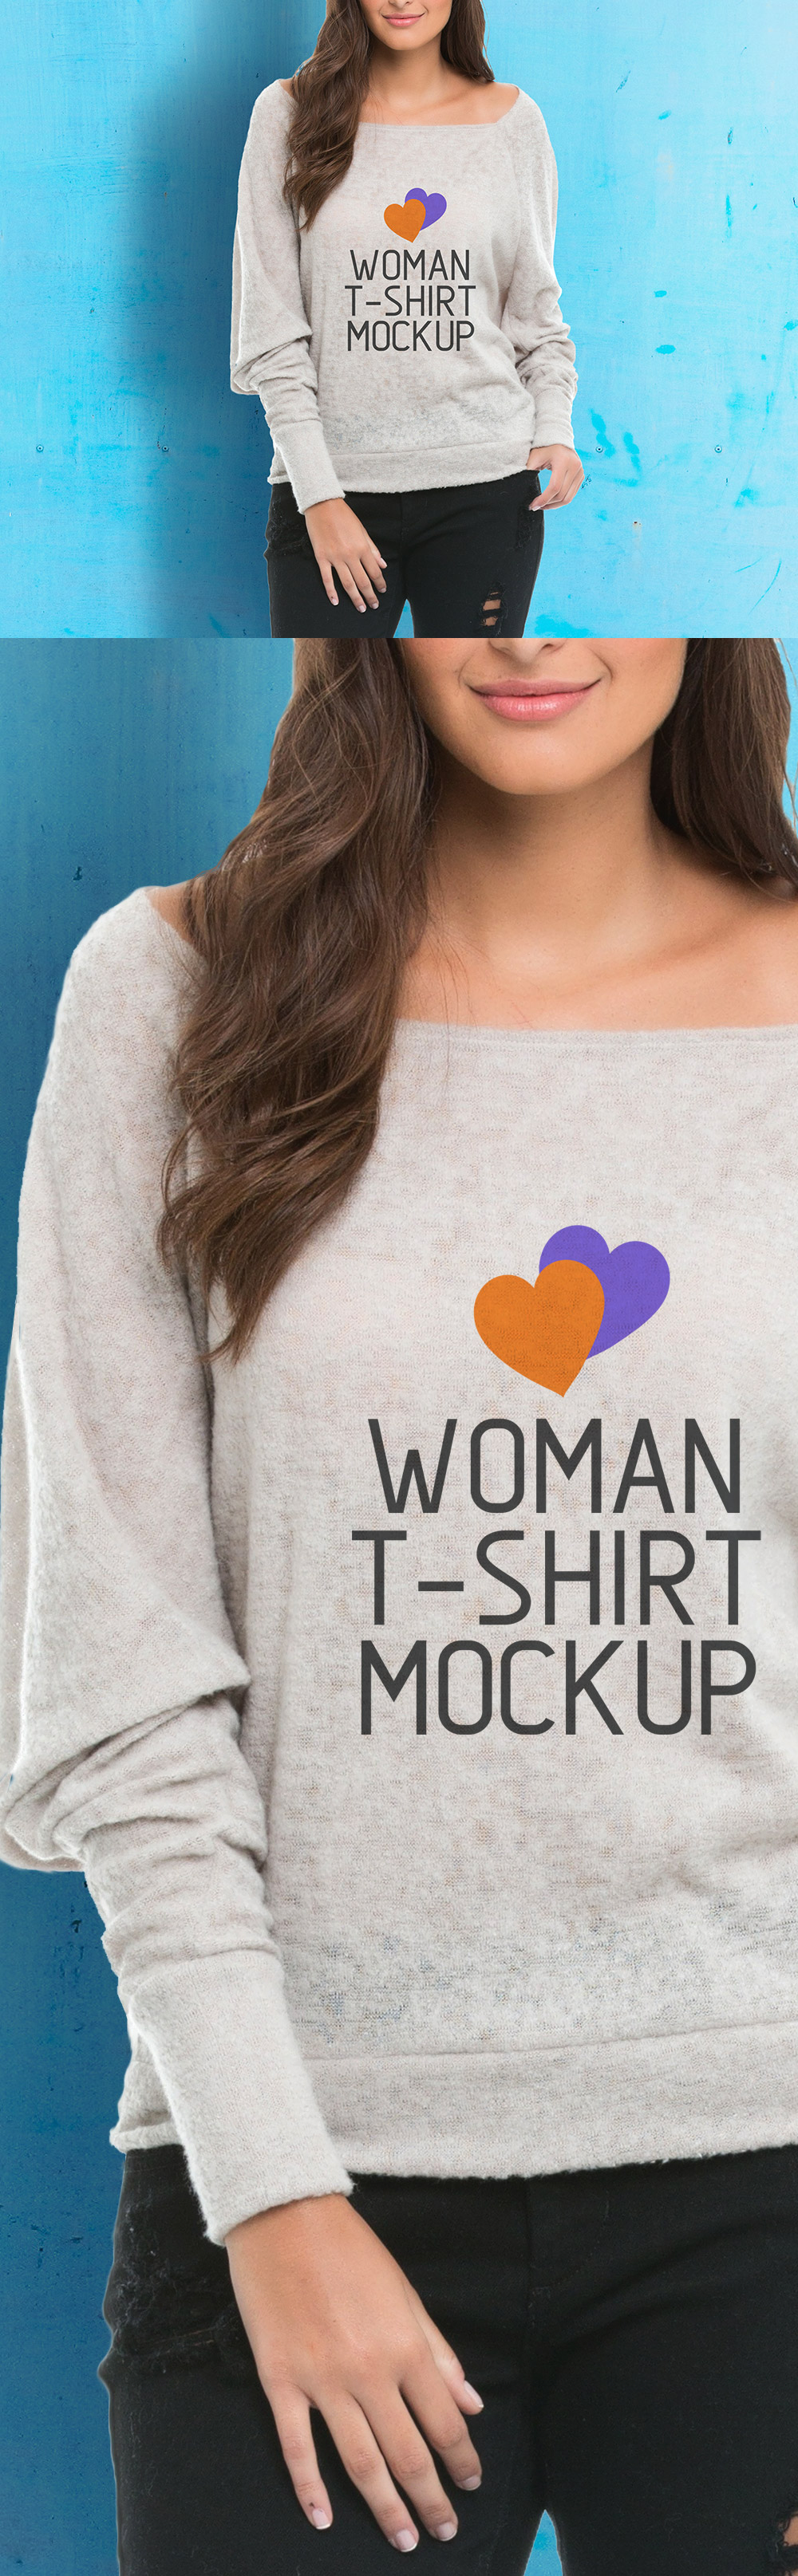 Woman T-shirt Mockup PSD